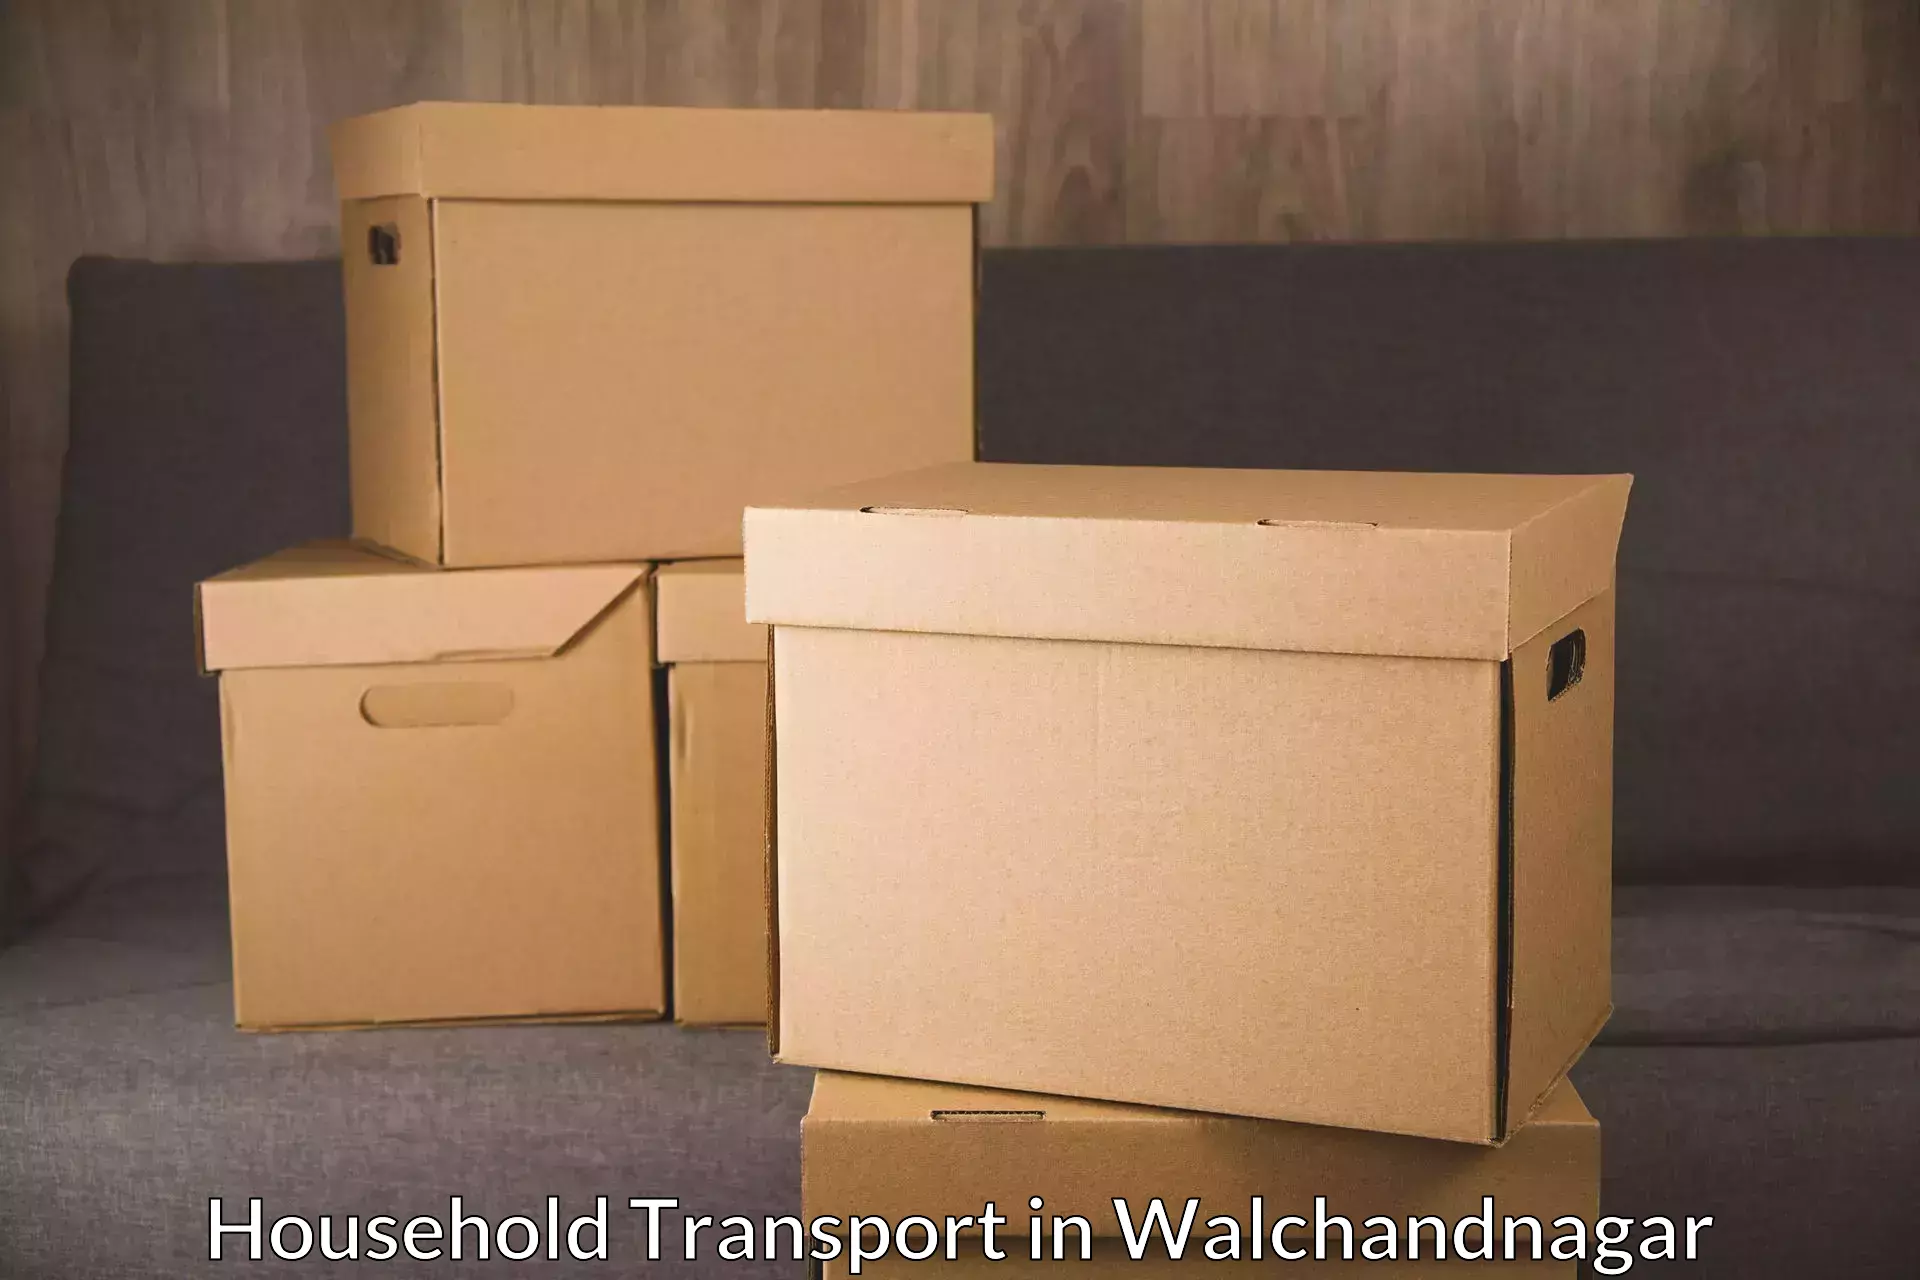 Household goods transport in Walchandnagar